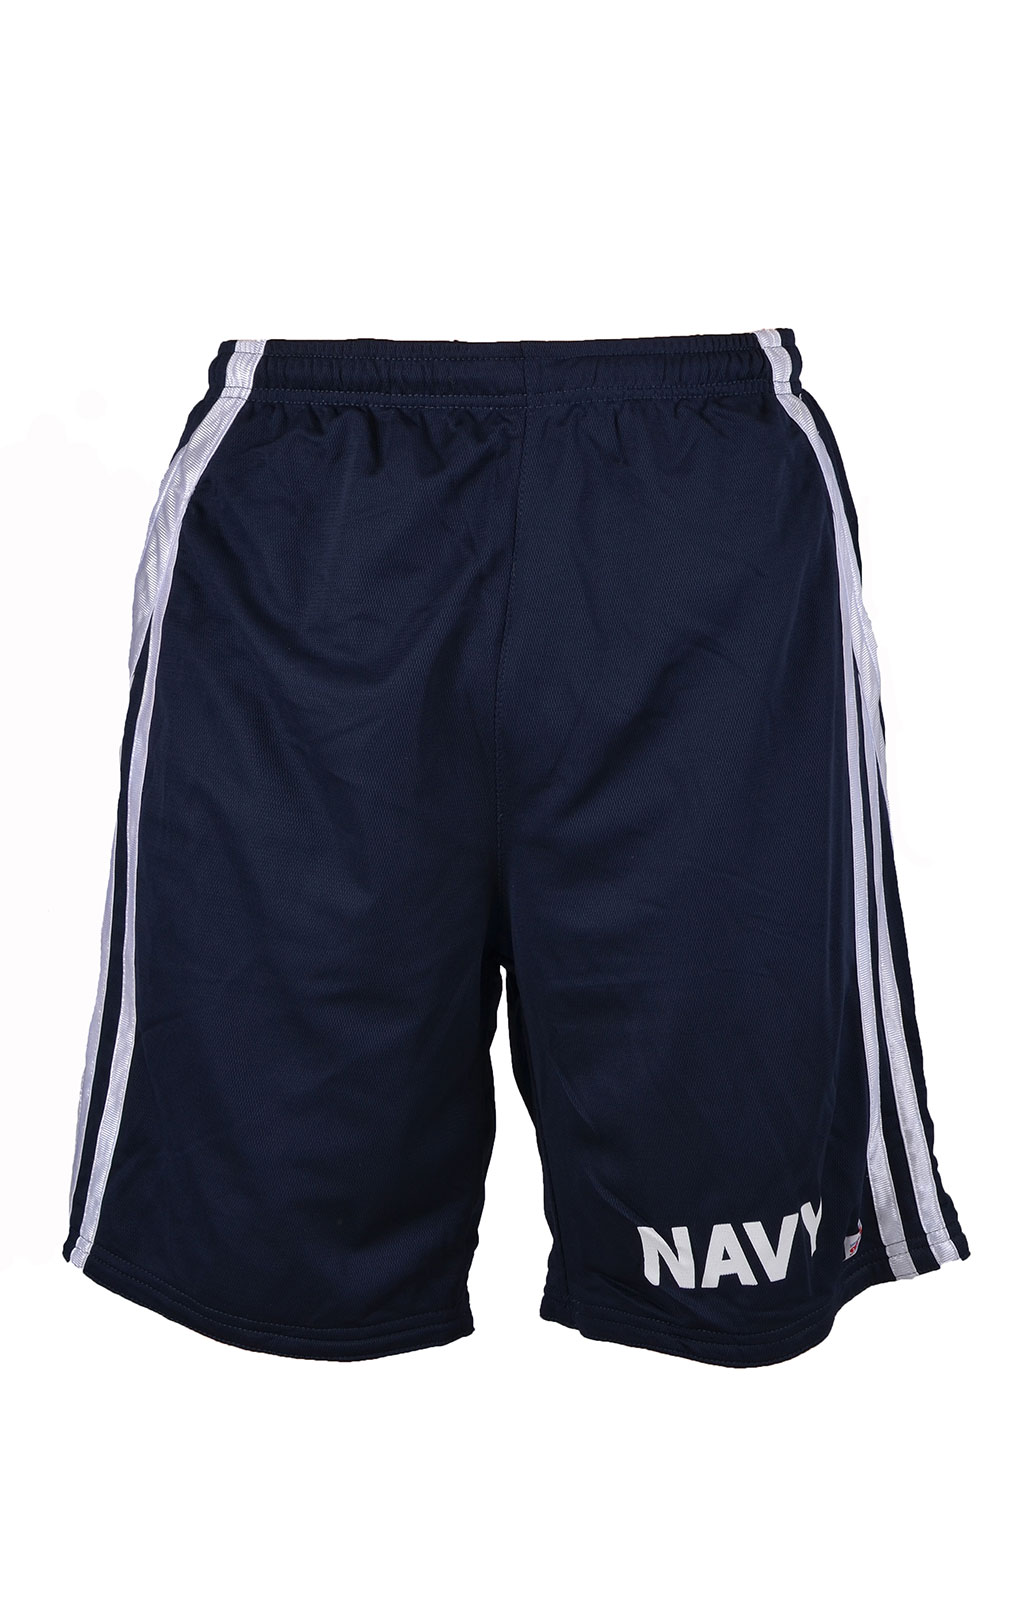 Шорты беговые NAVY reversible navy white США